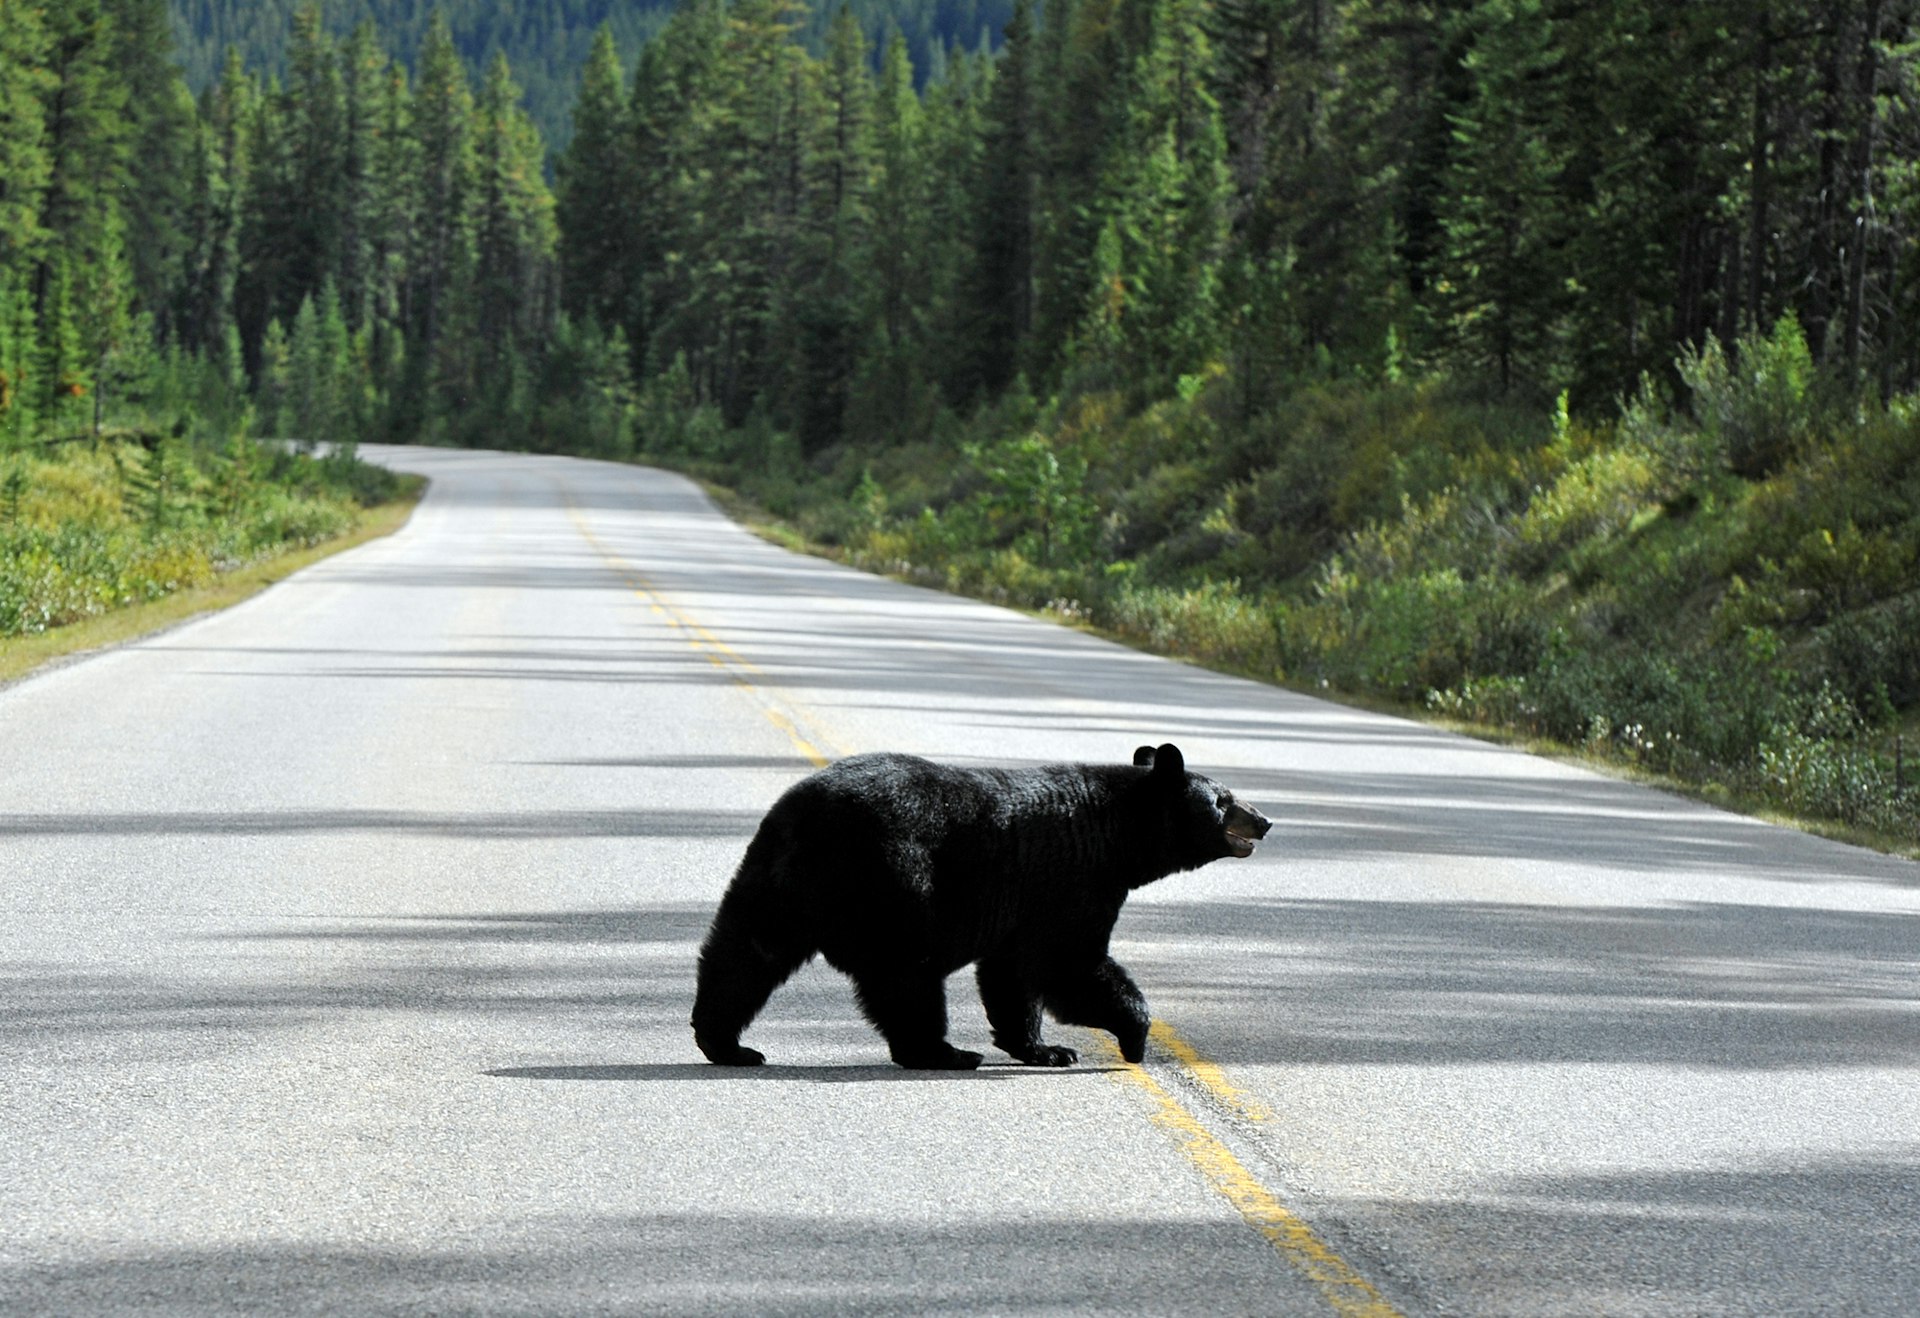 A black bear walking across an asphalt road runing through a forest in Banff National Park